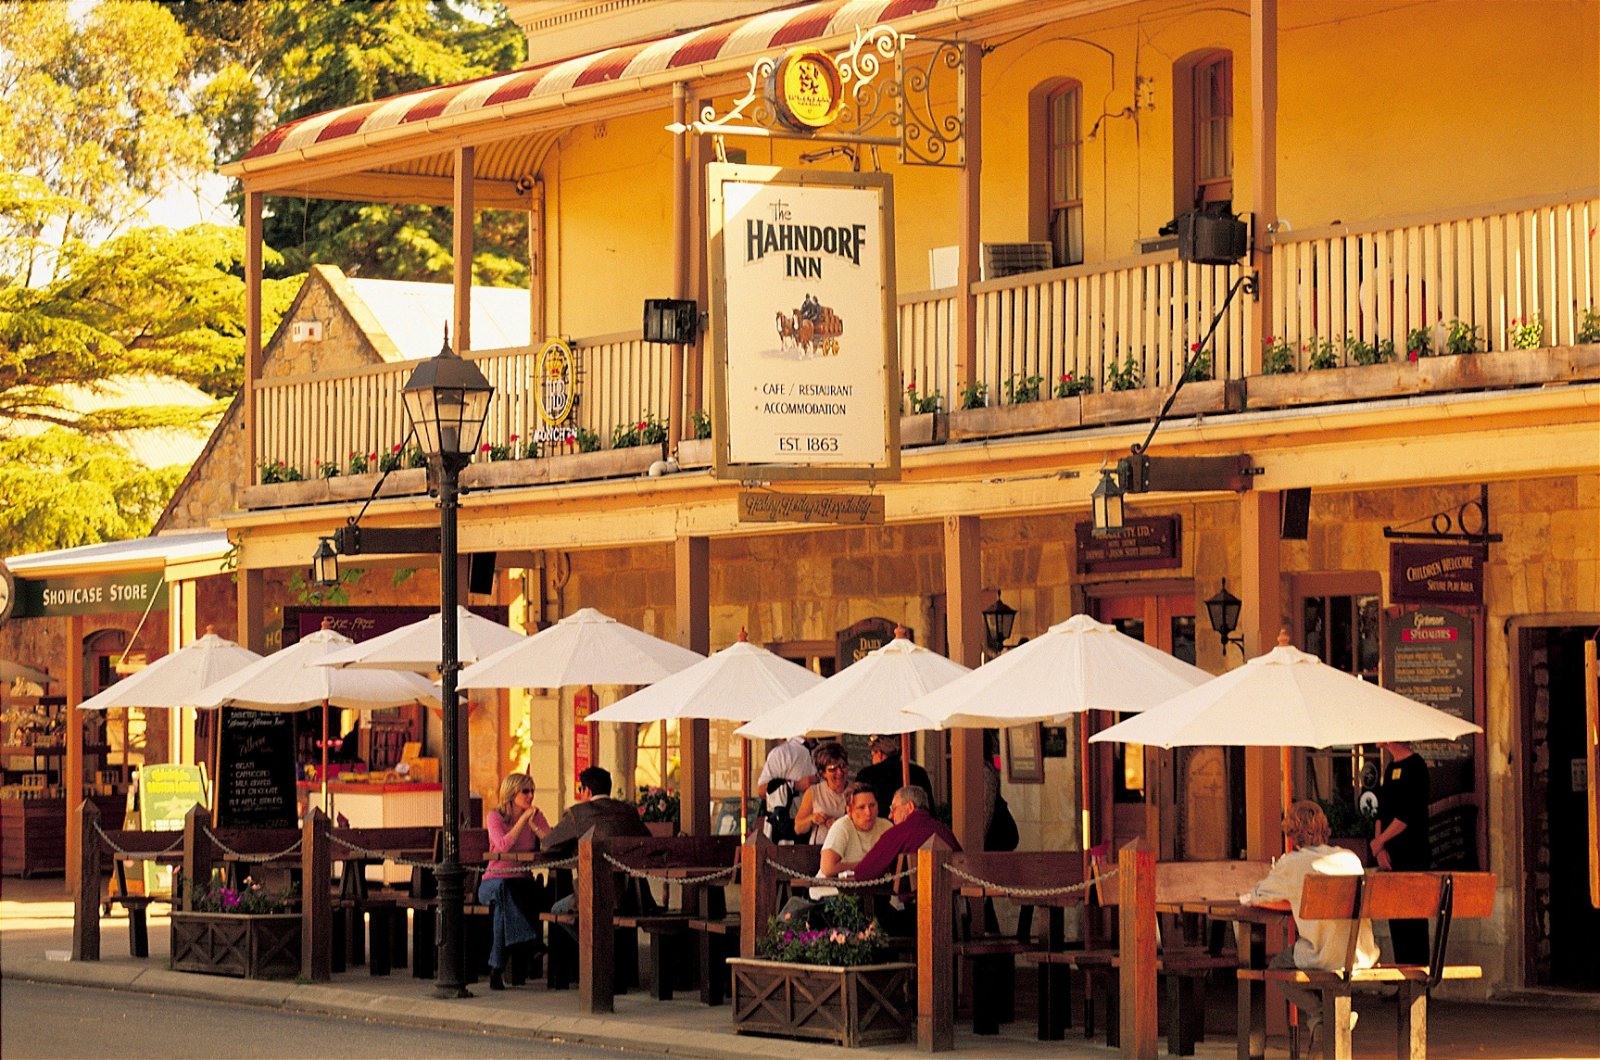 Hahndorf Inn Restaurant - Surfers Paradise Gold Coast